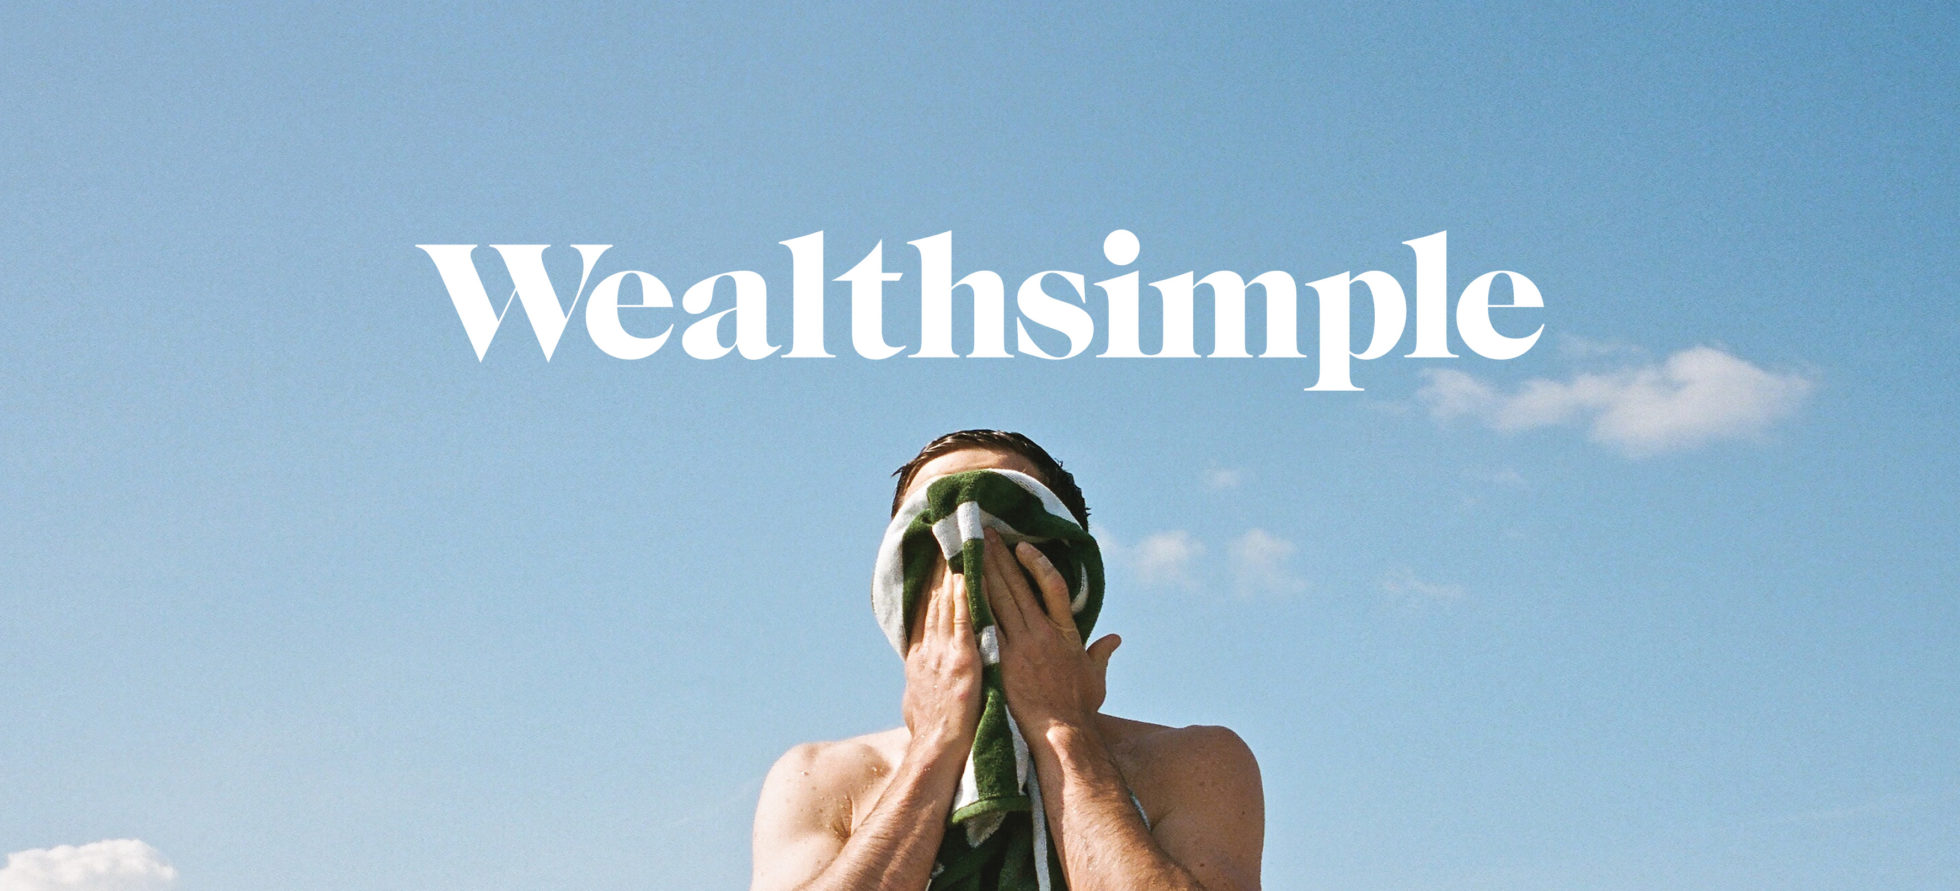 Wealthsimple Review 2021: Is It Legit? - My Millennial Guide